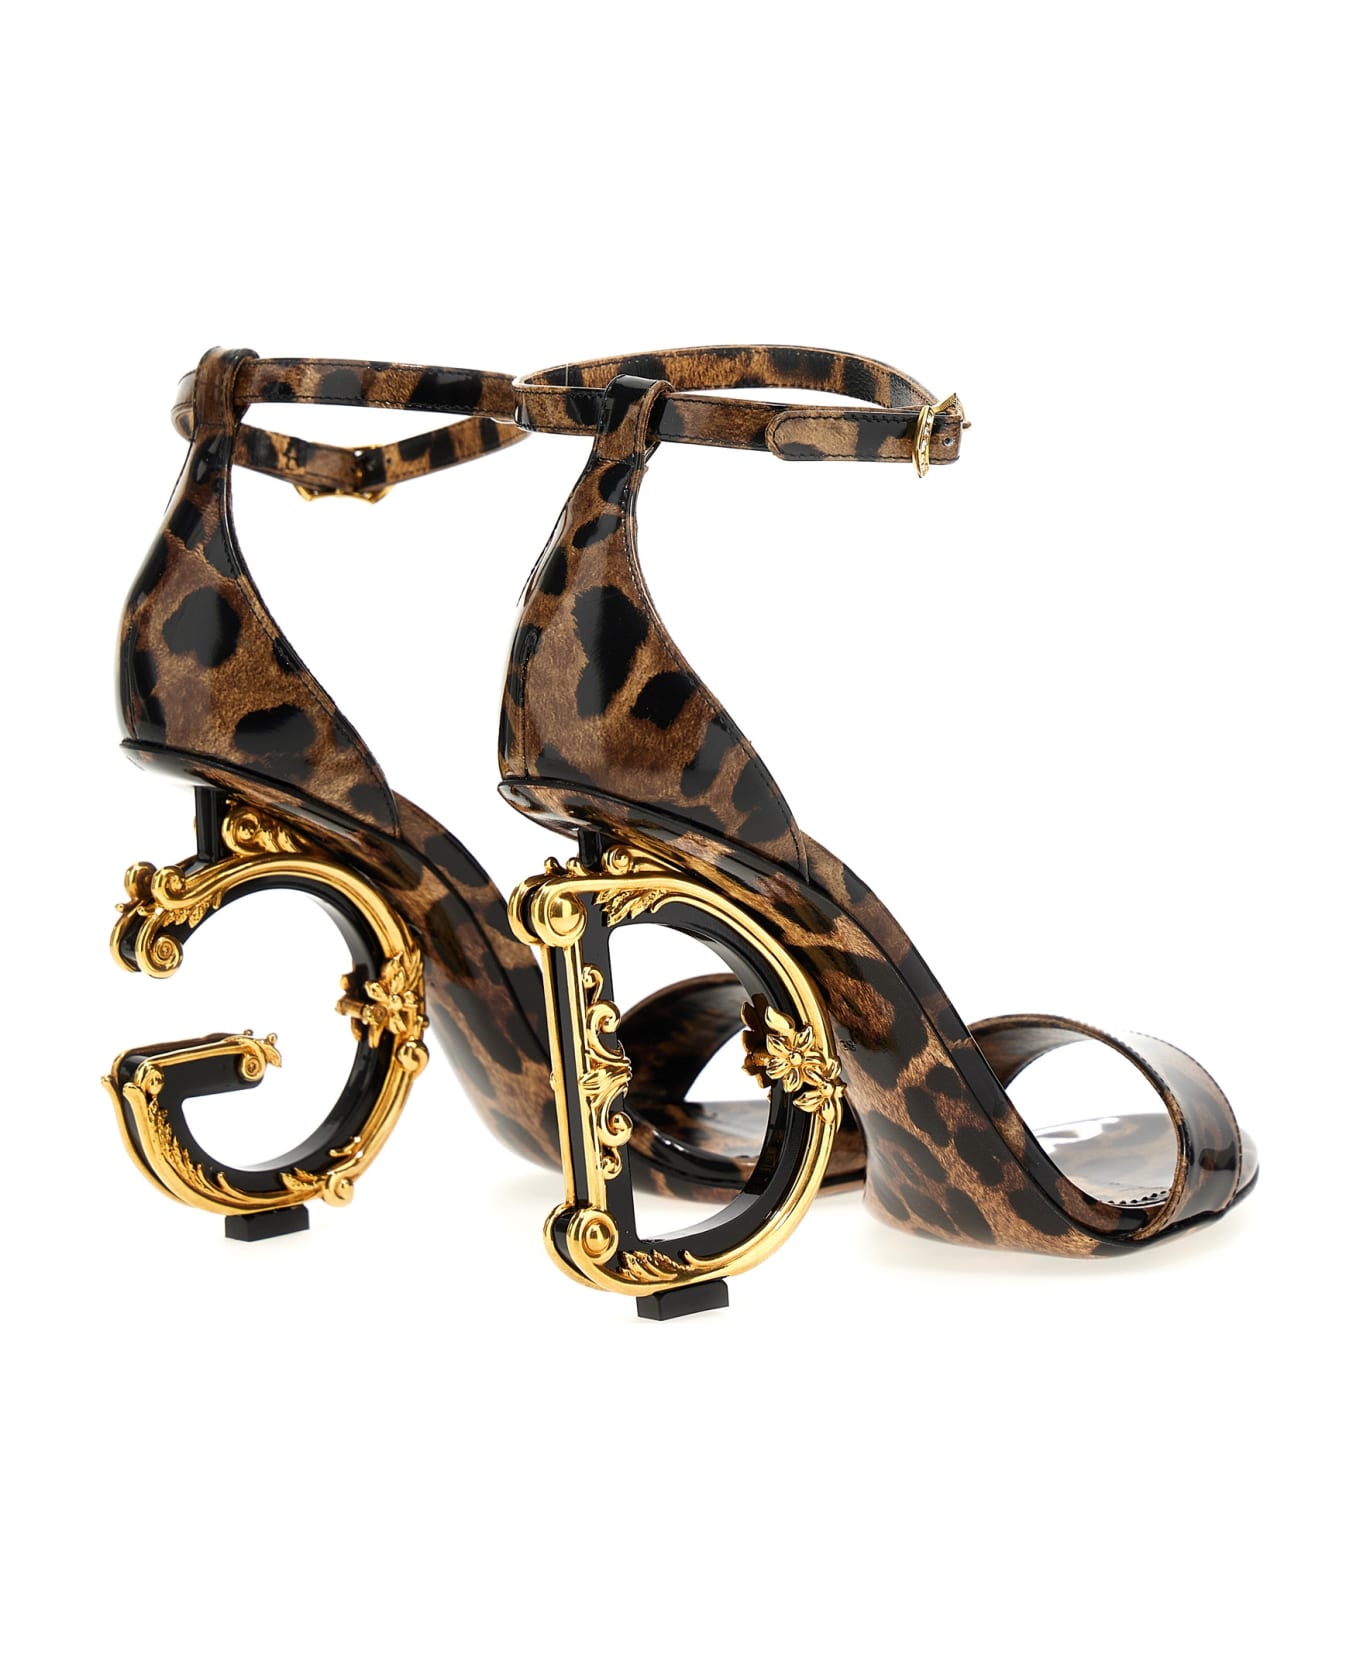 Dolce & Gabbana Animal-print Sandals With Logo Heel - Leo サンダル